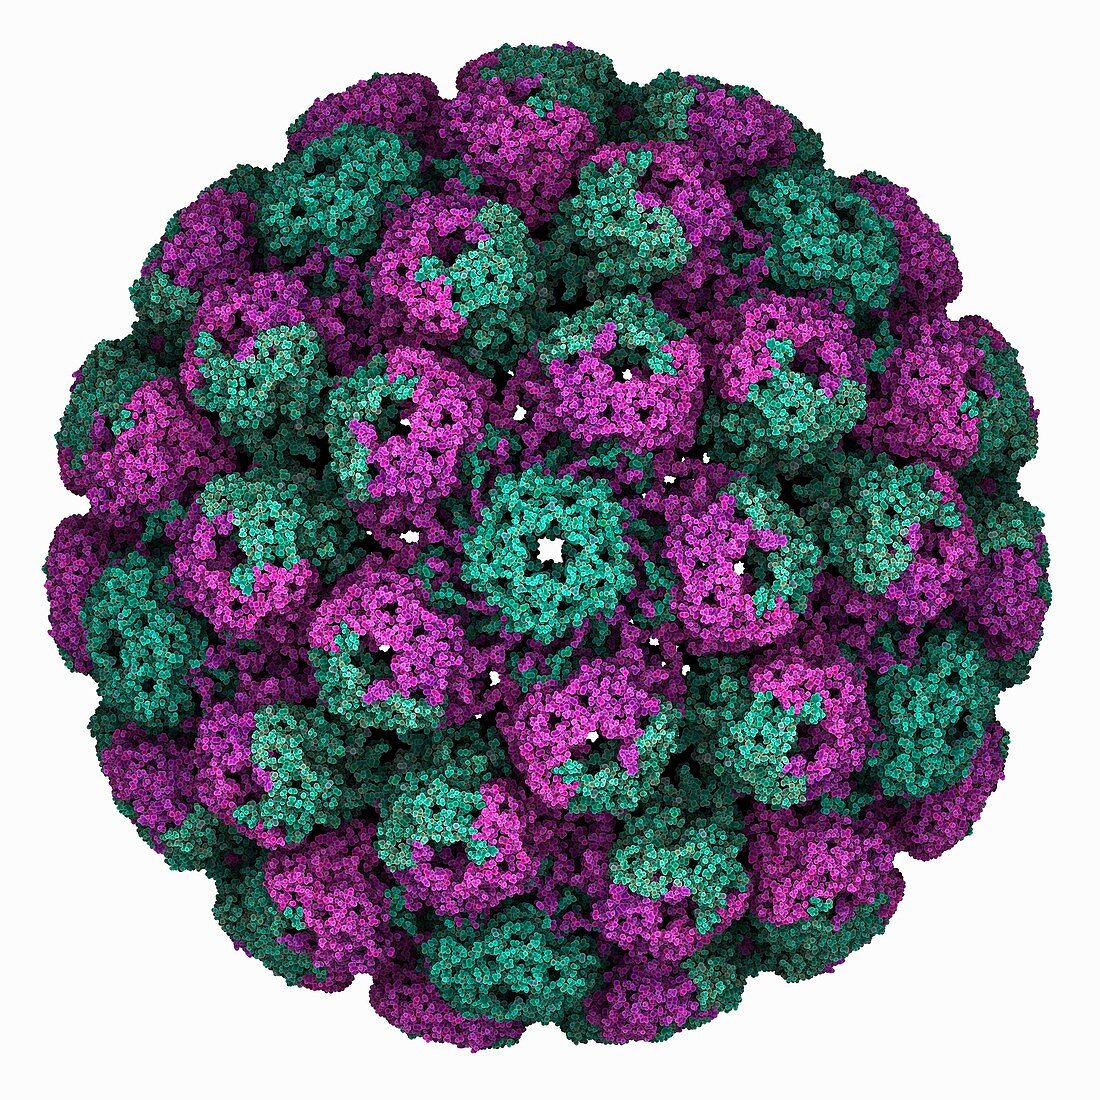 BK polyoma virus capsid, molecular model